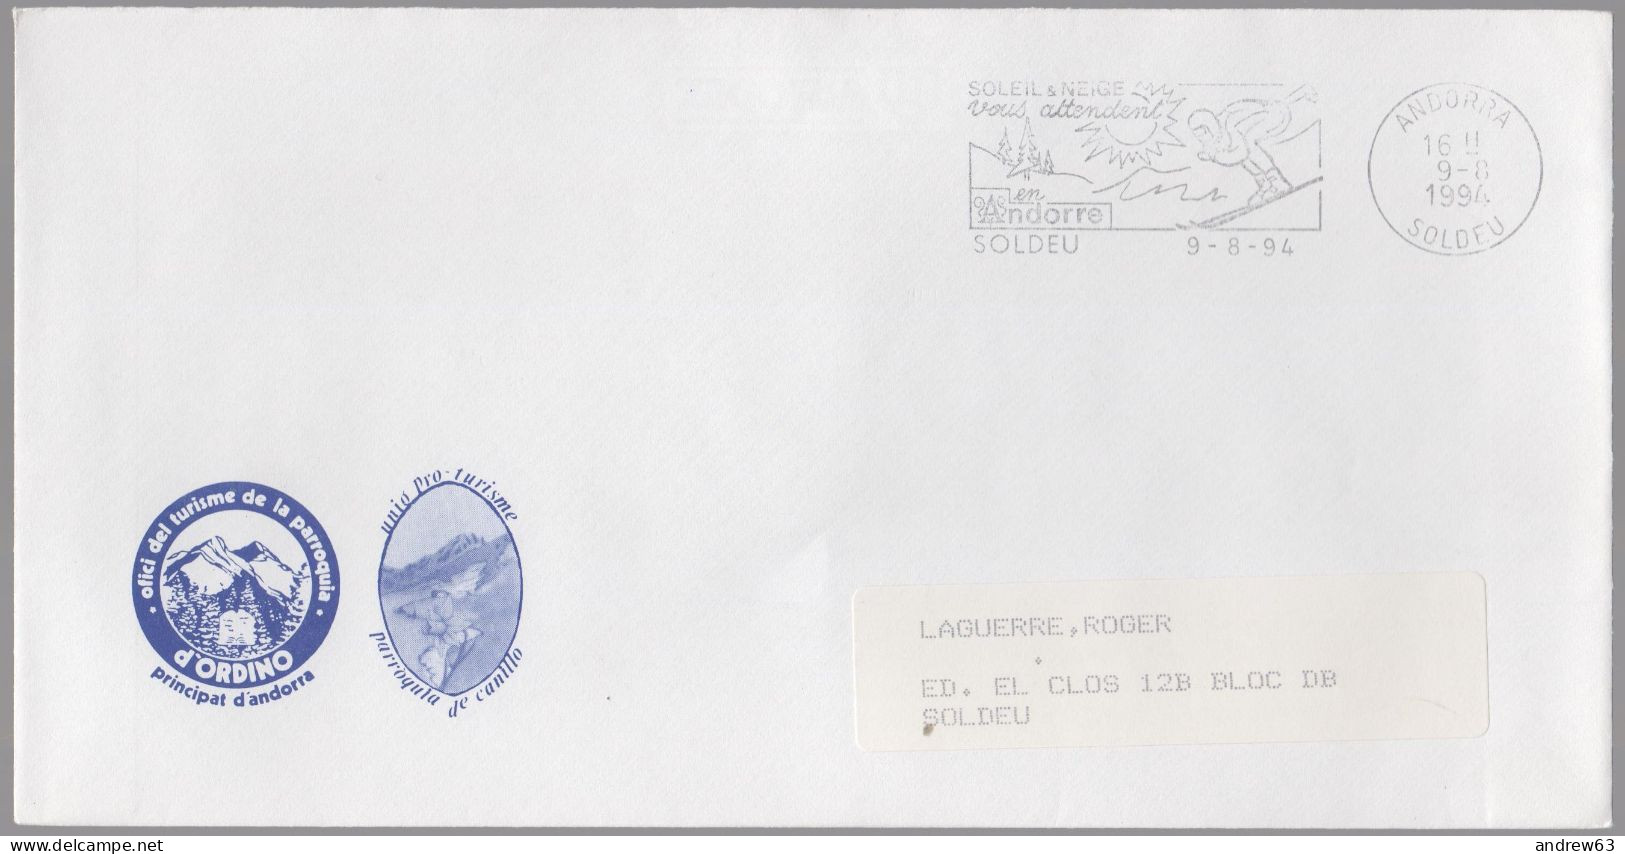 ANDORRA - ANDORRE - 1994 - Lettre En Franchise + Flamme - Viaggiata Da Soldeu Per Soldeu - Briefe U. Dokumente